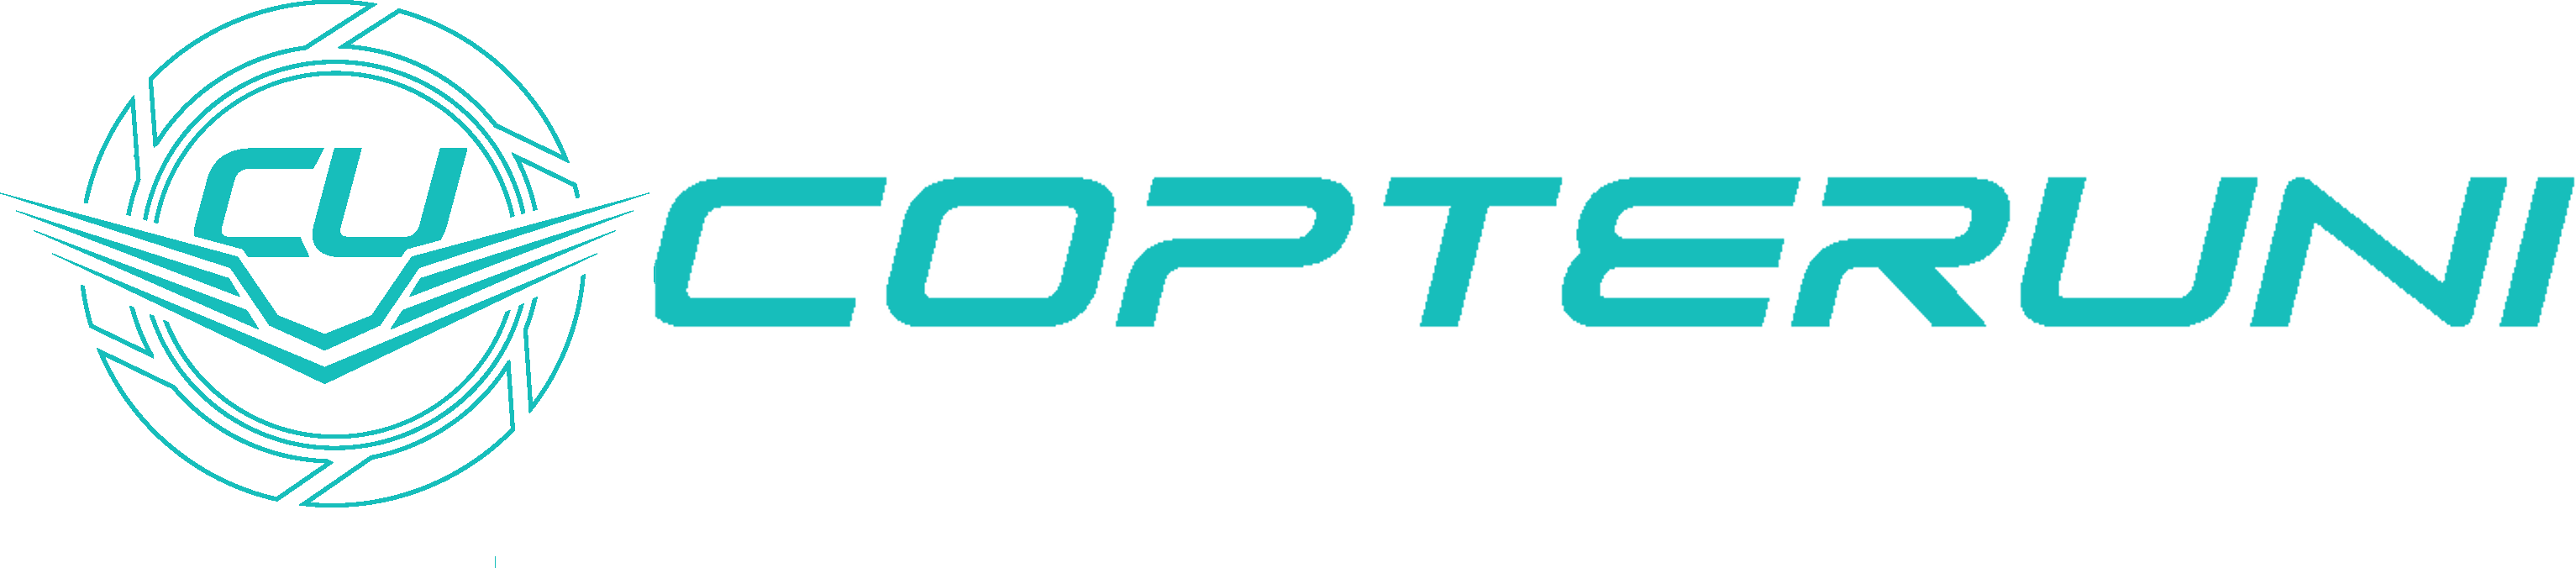 Copteruni_logo